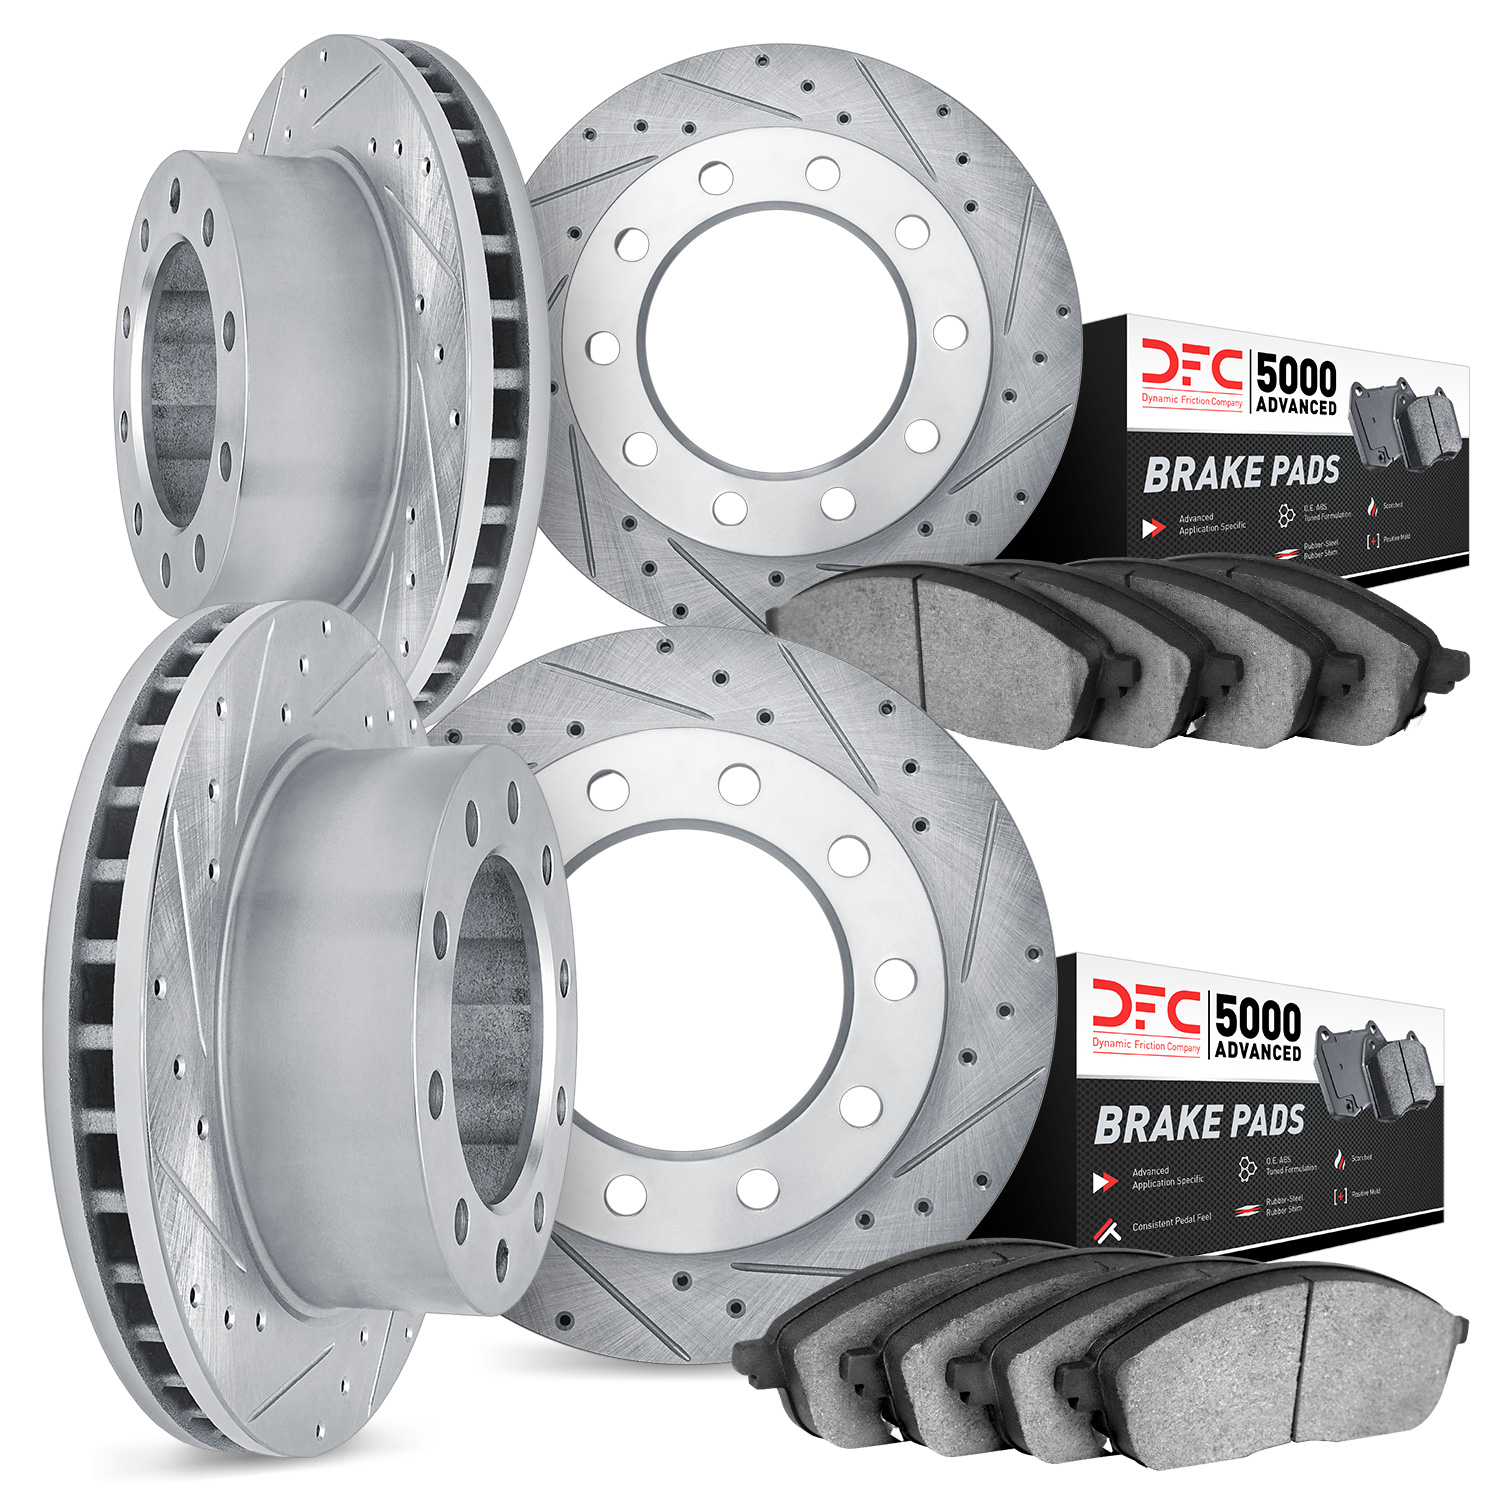 7504-99741 Drilled/Slotted Brake Rotors w/5000 Advanced Brake Pads Kit [Silver], Fits Select Multiple Makes/Models, Position: Fr